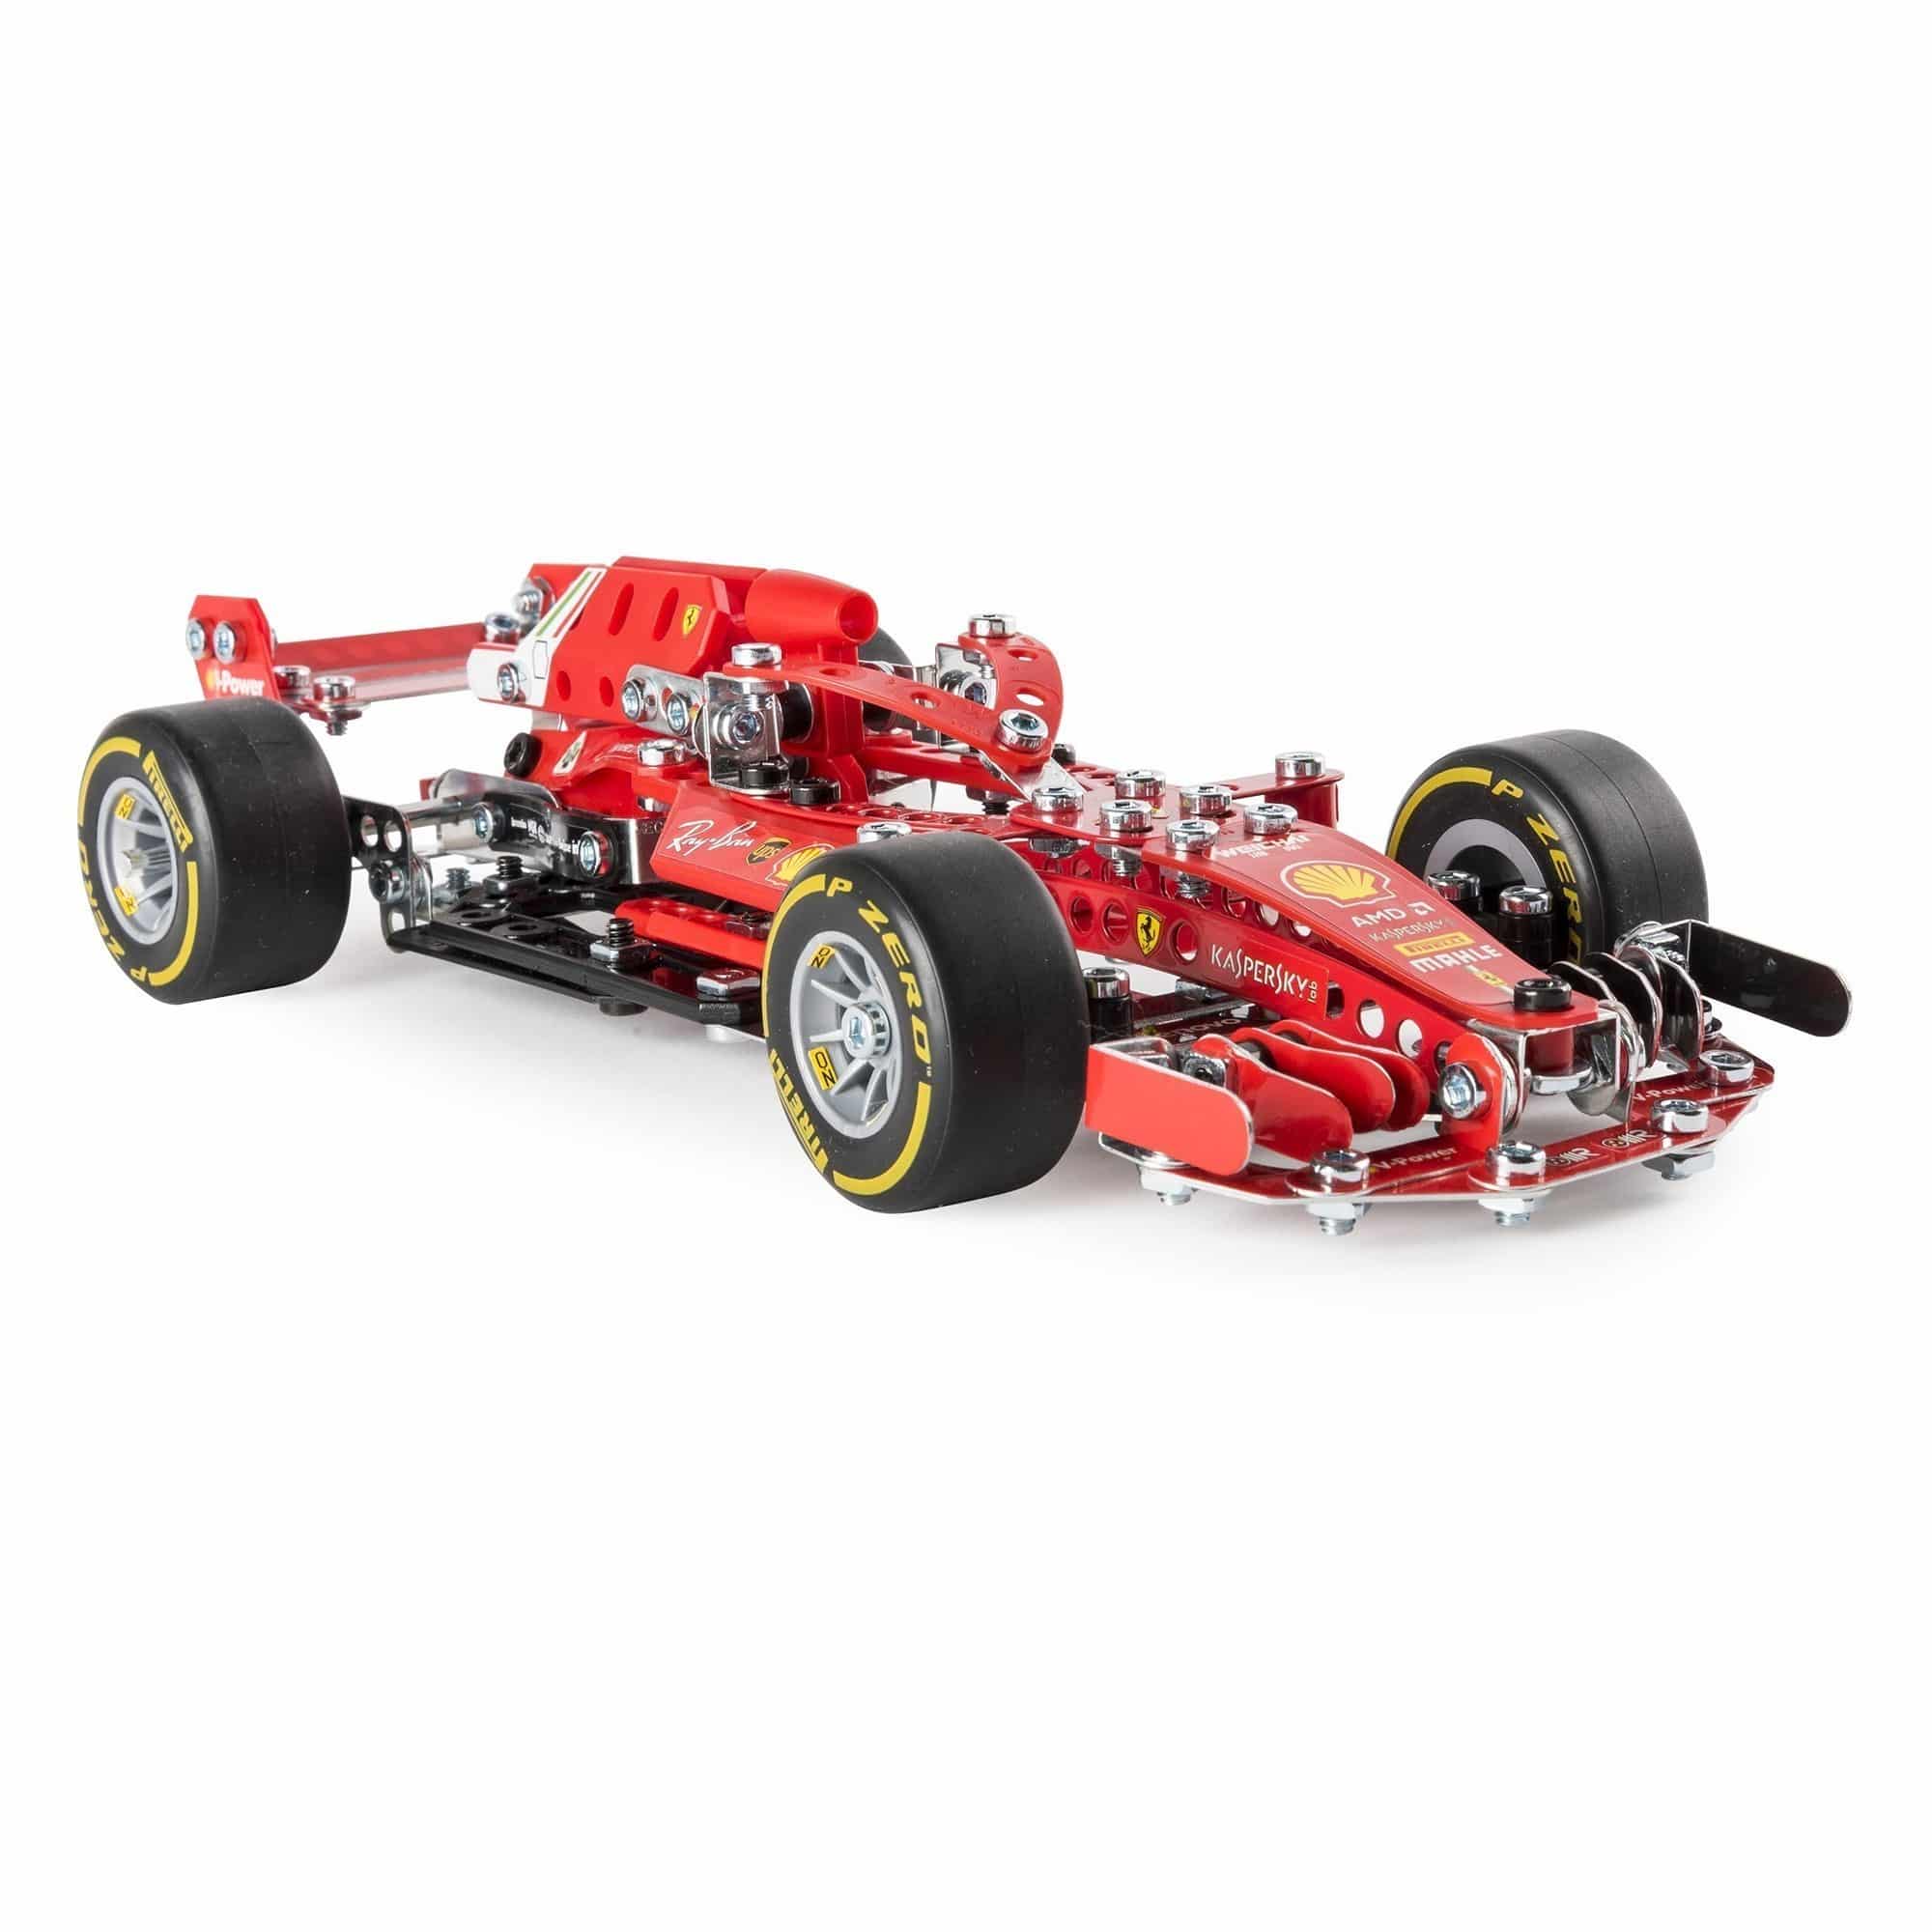 Meccano Engineering & Robotics 18303 - Ferrari Grand Prix Racer